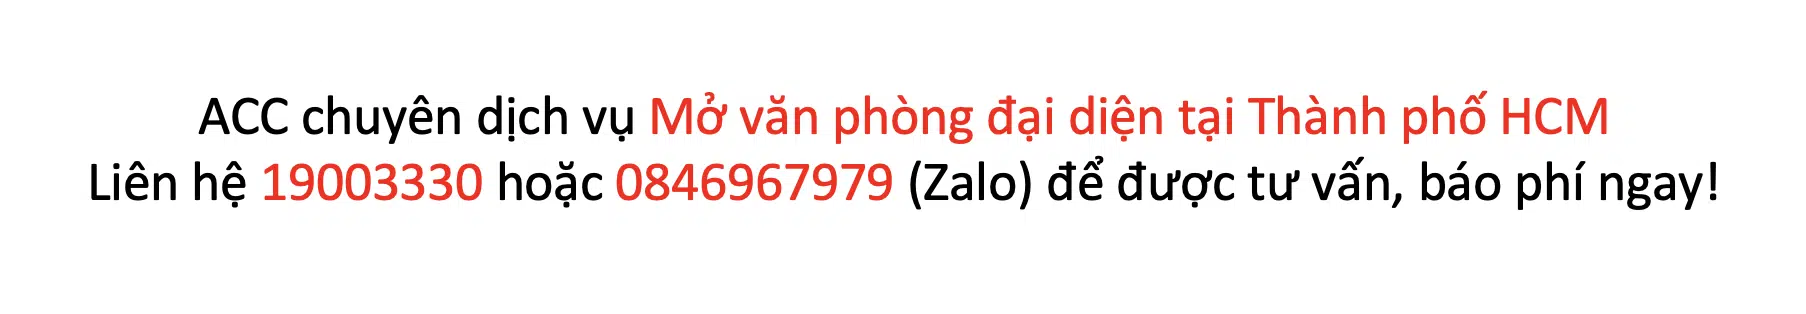 Thu Tuc Thanh Lap Van Phong Dai Dien Tai Tphcm